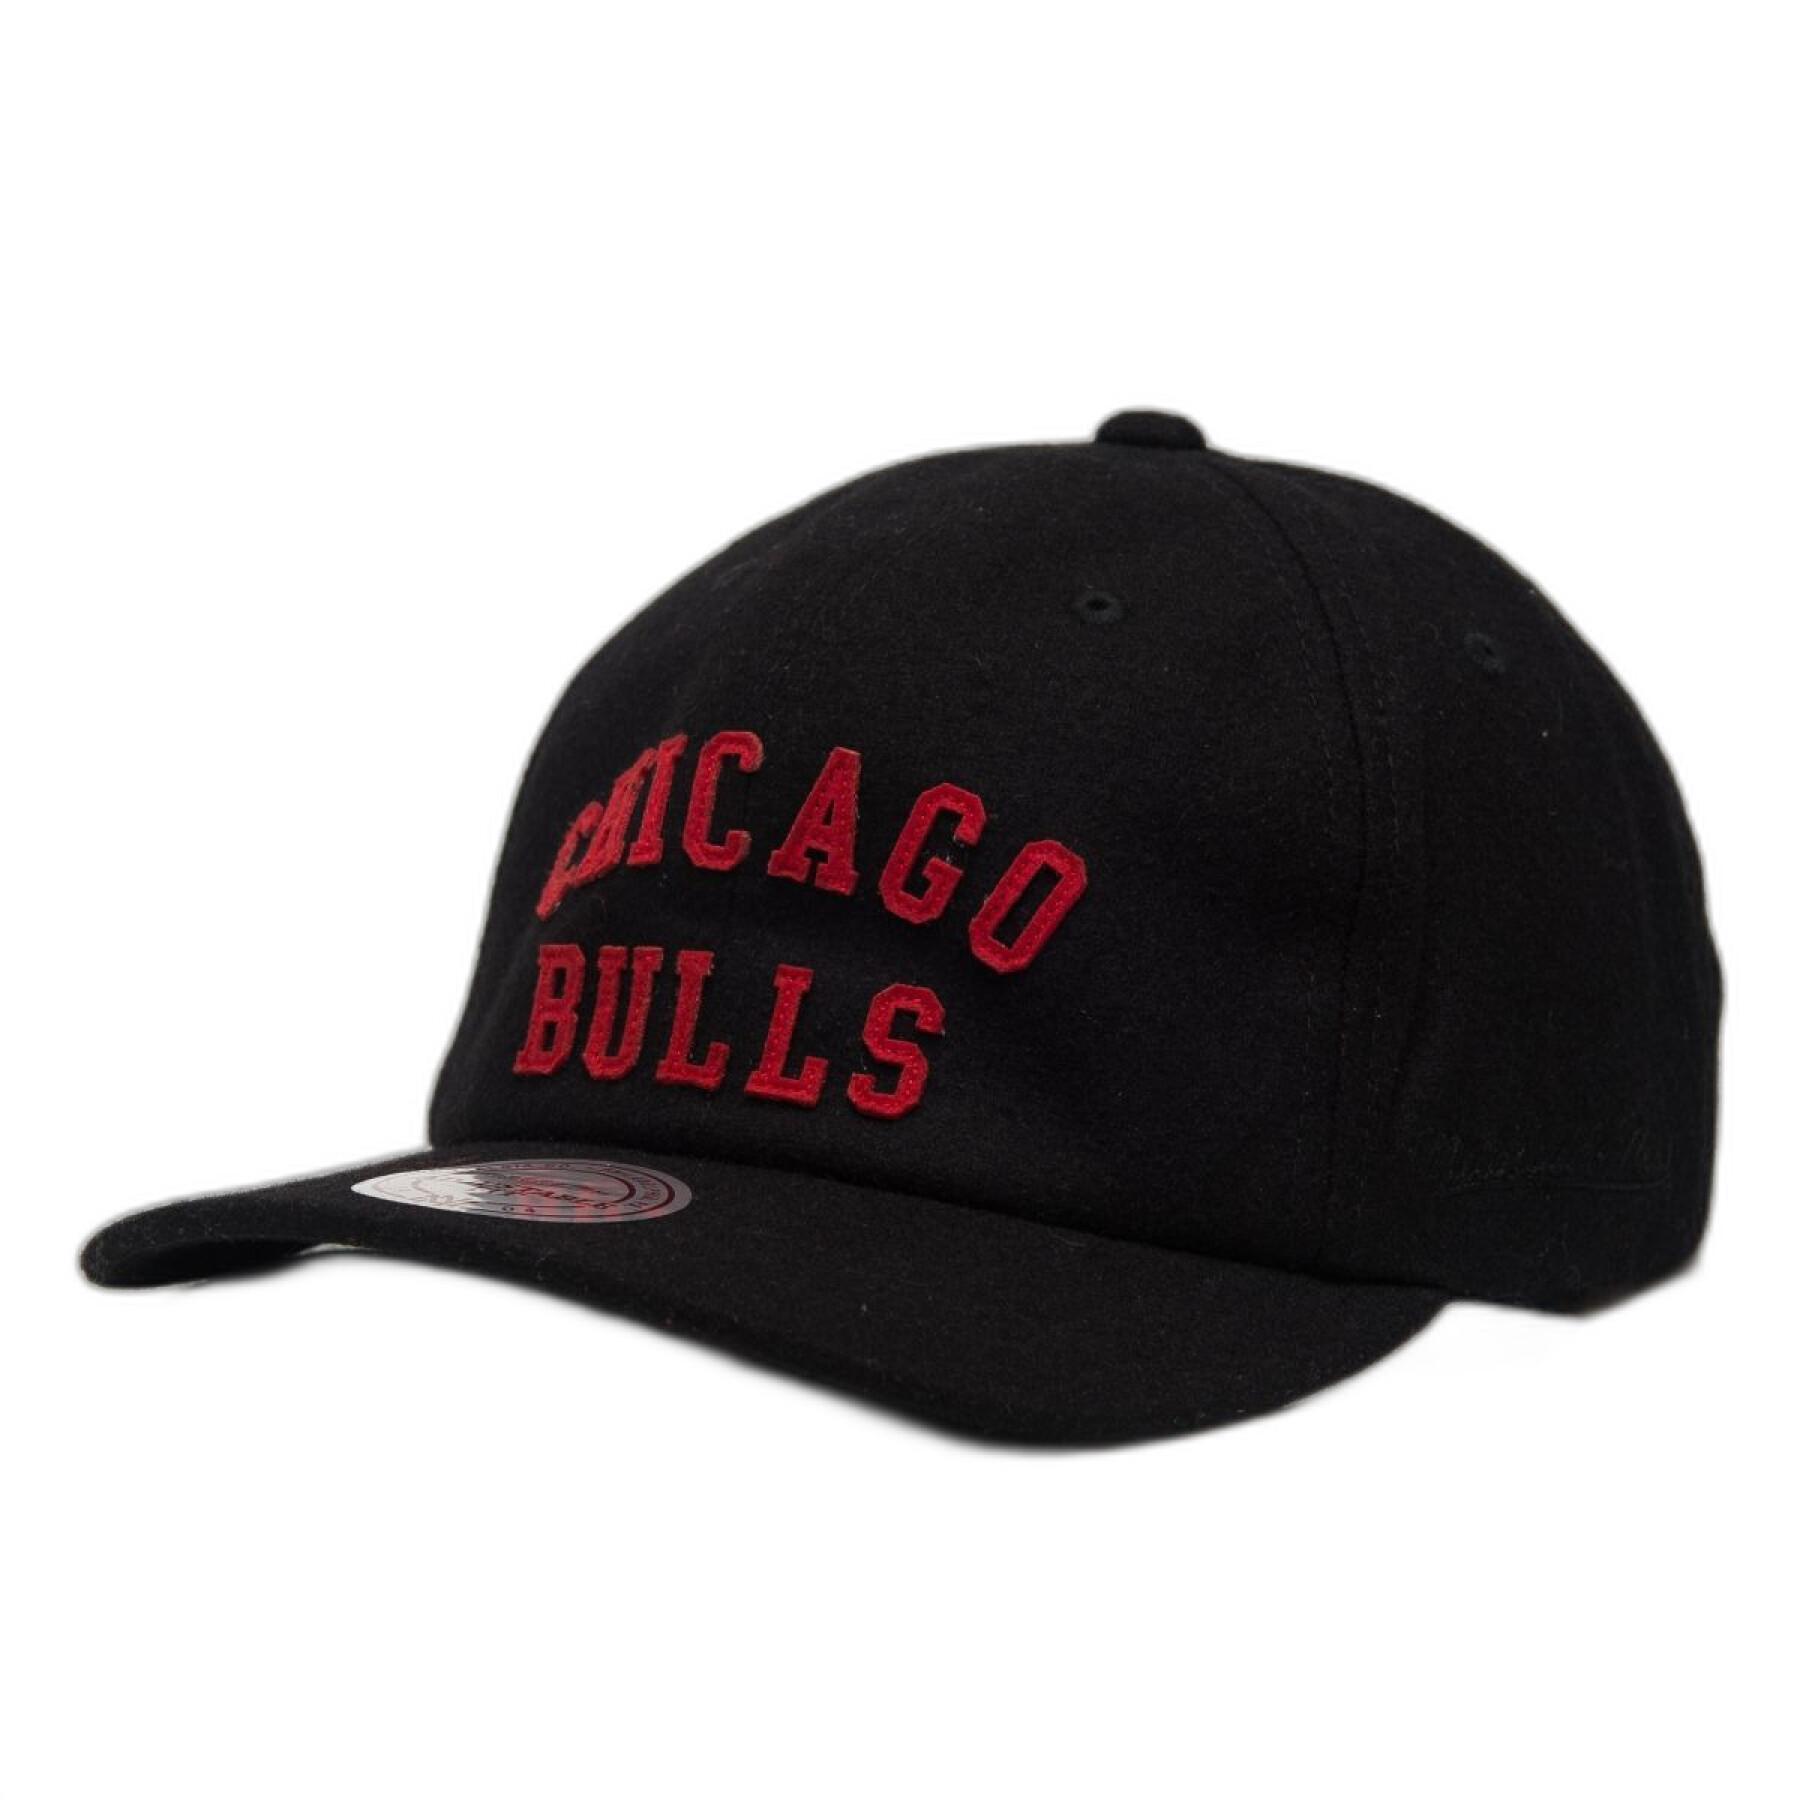 Cap Chicago Bulls hwc felt arch strapback